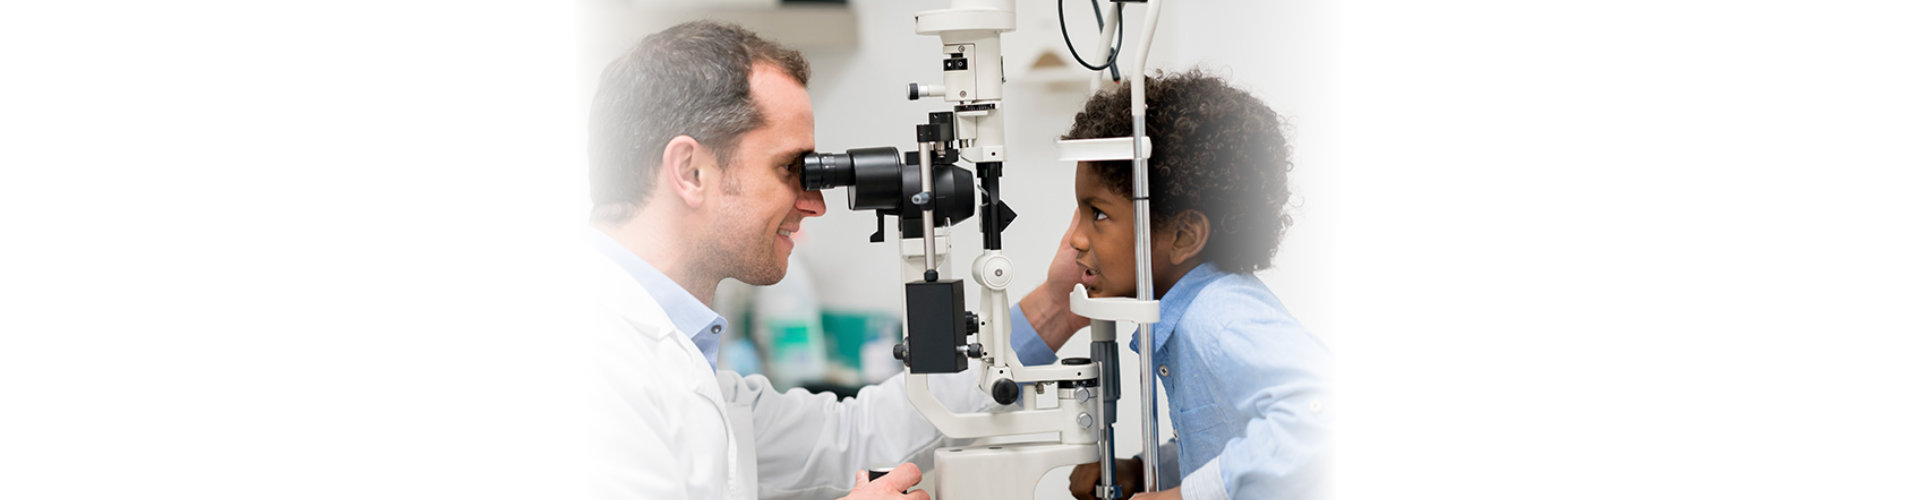 doctor checks vision of a child boy